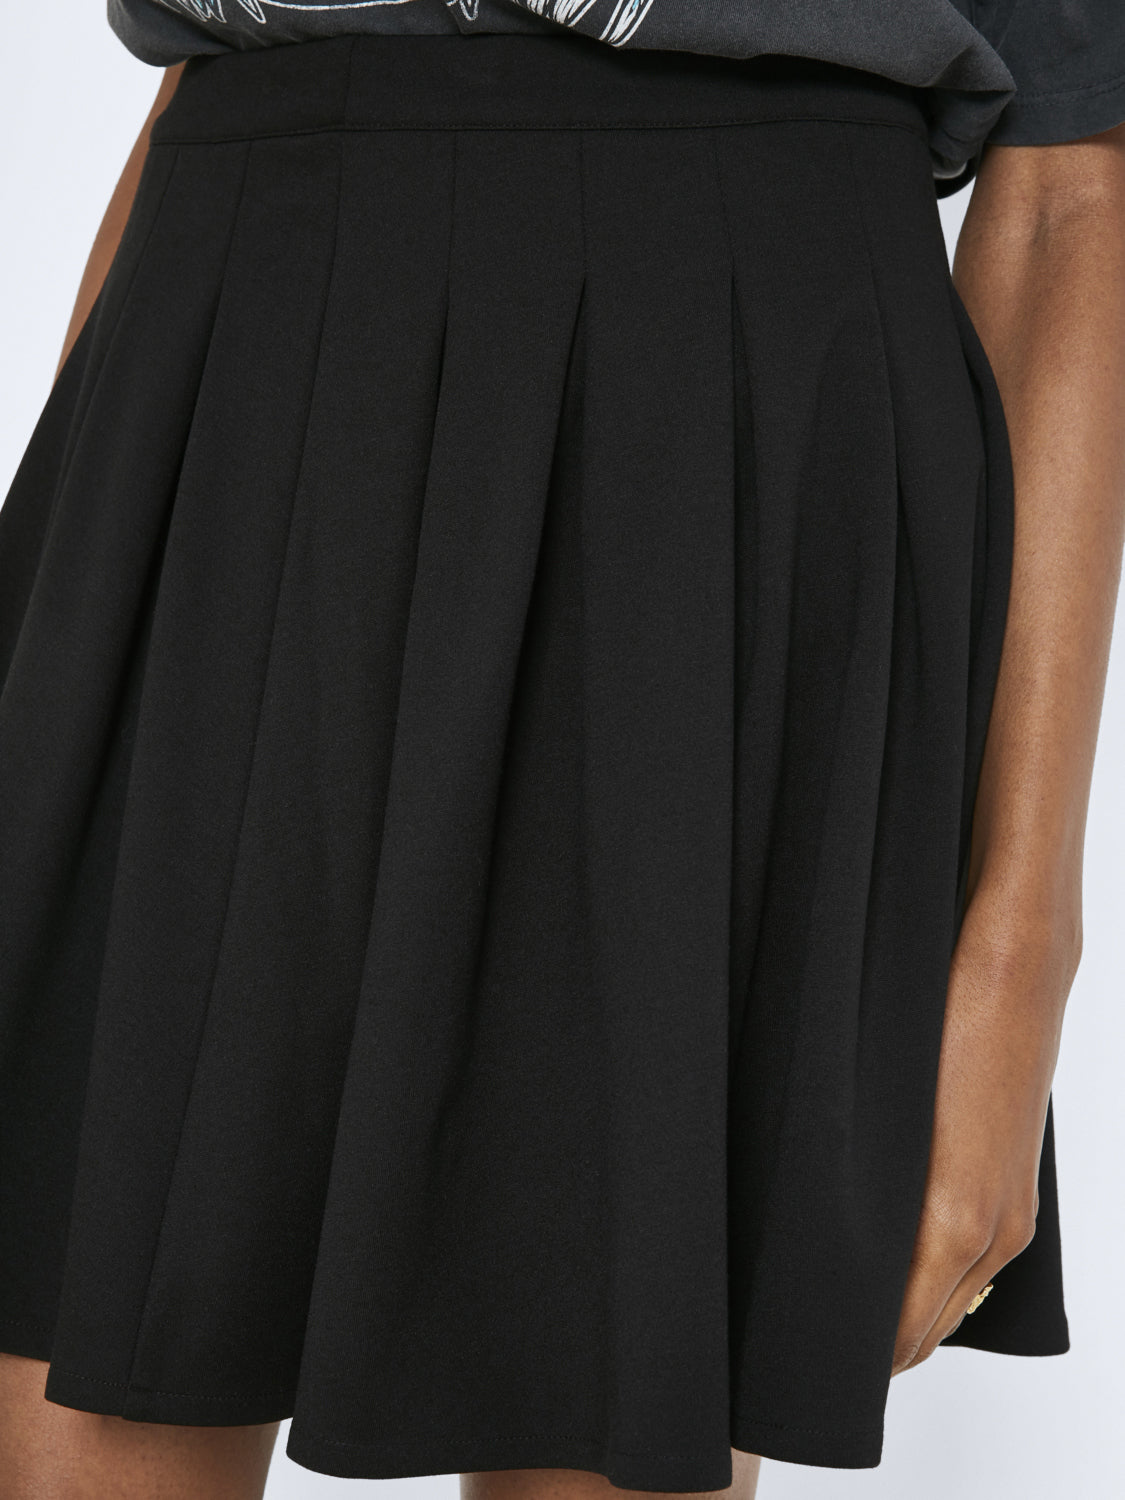 NMHEIDI Skirt - Black